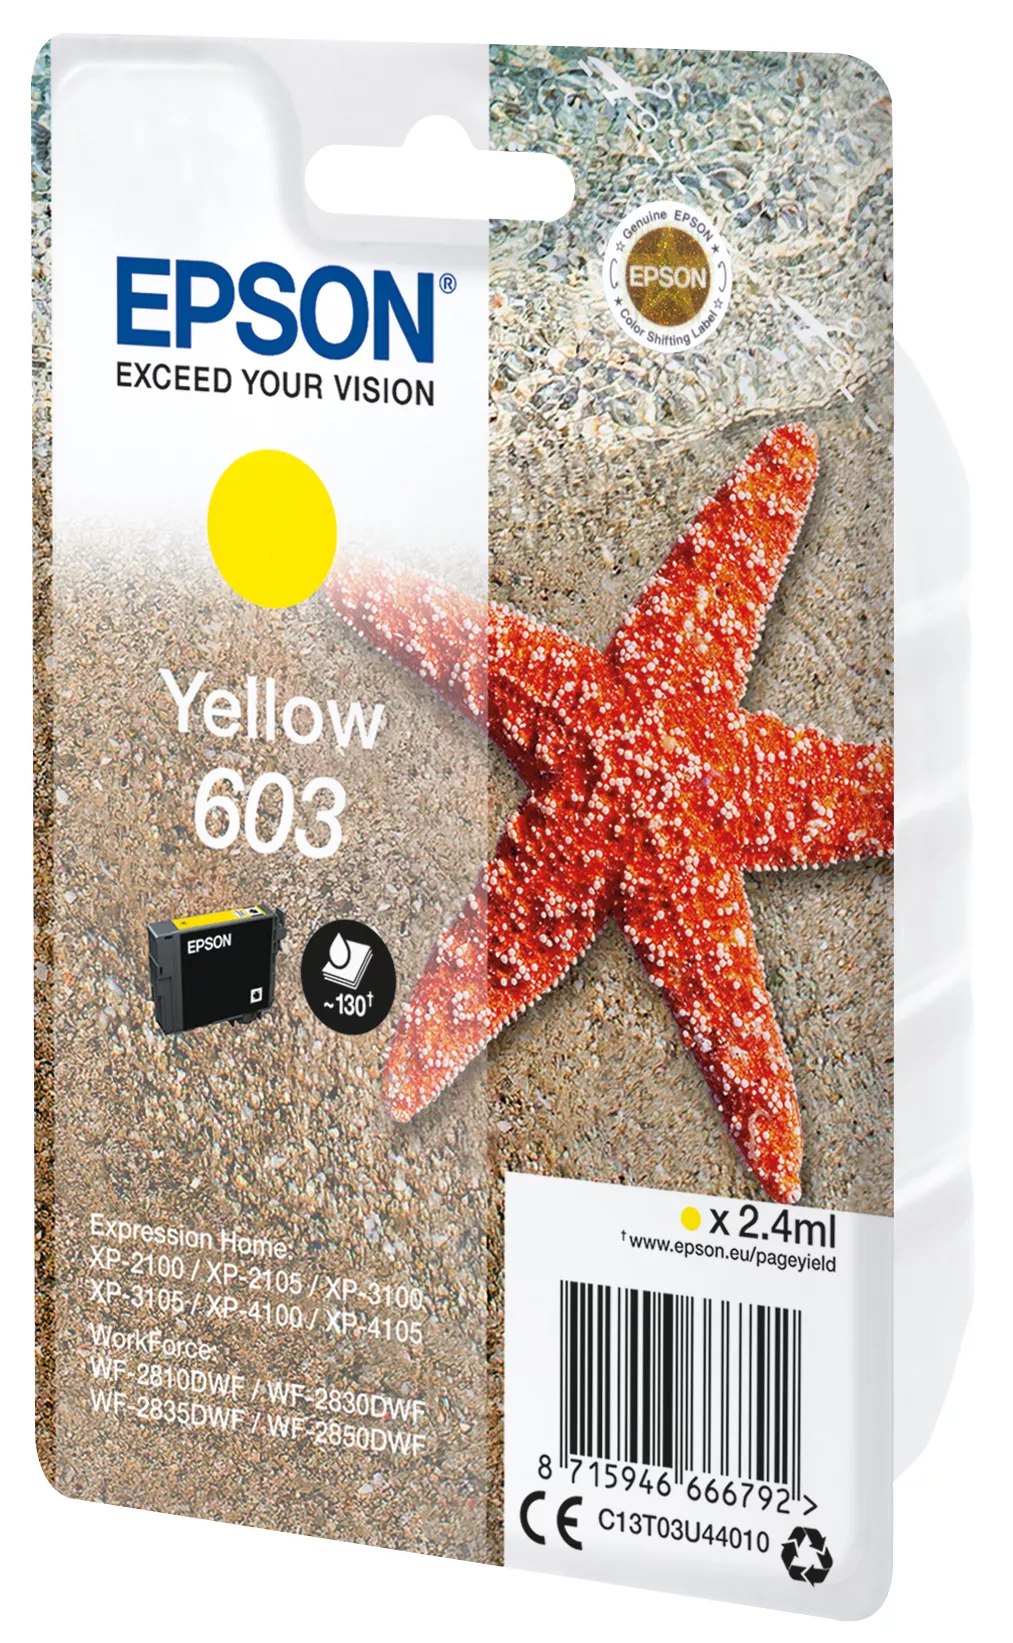 Vente EPSON Singlepack Yellow 603 Ink Epson au meilleur prix - visuel 2